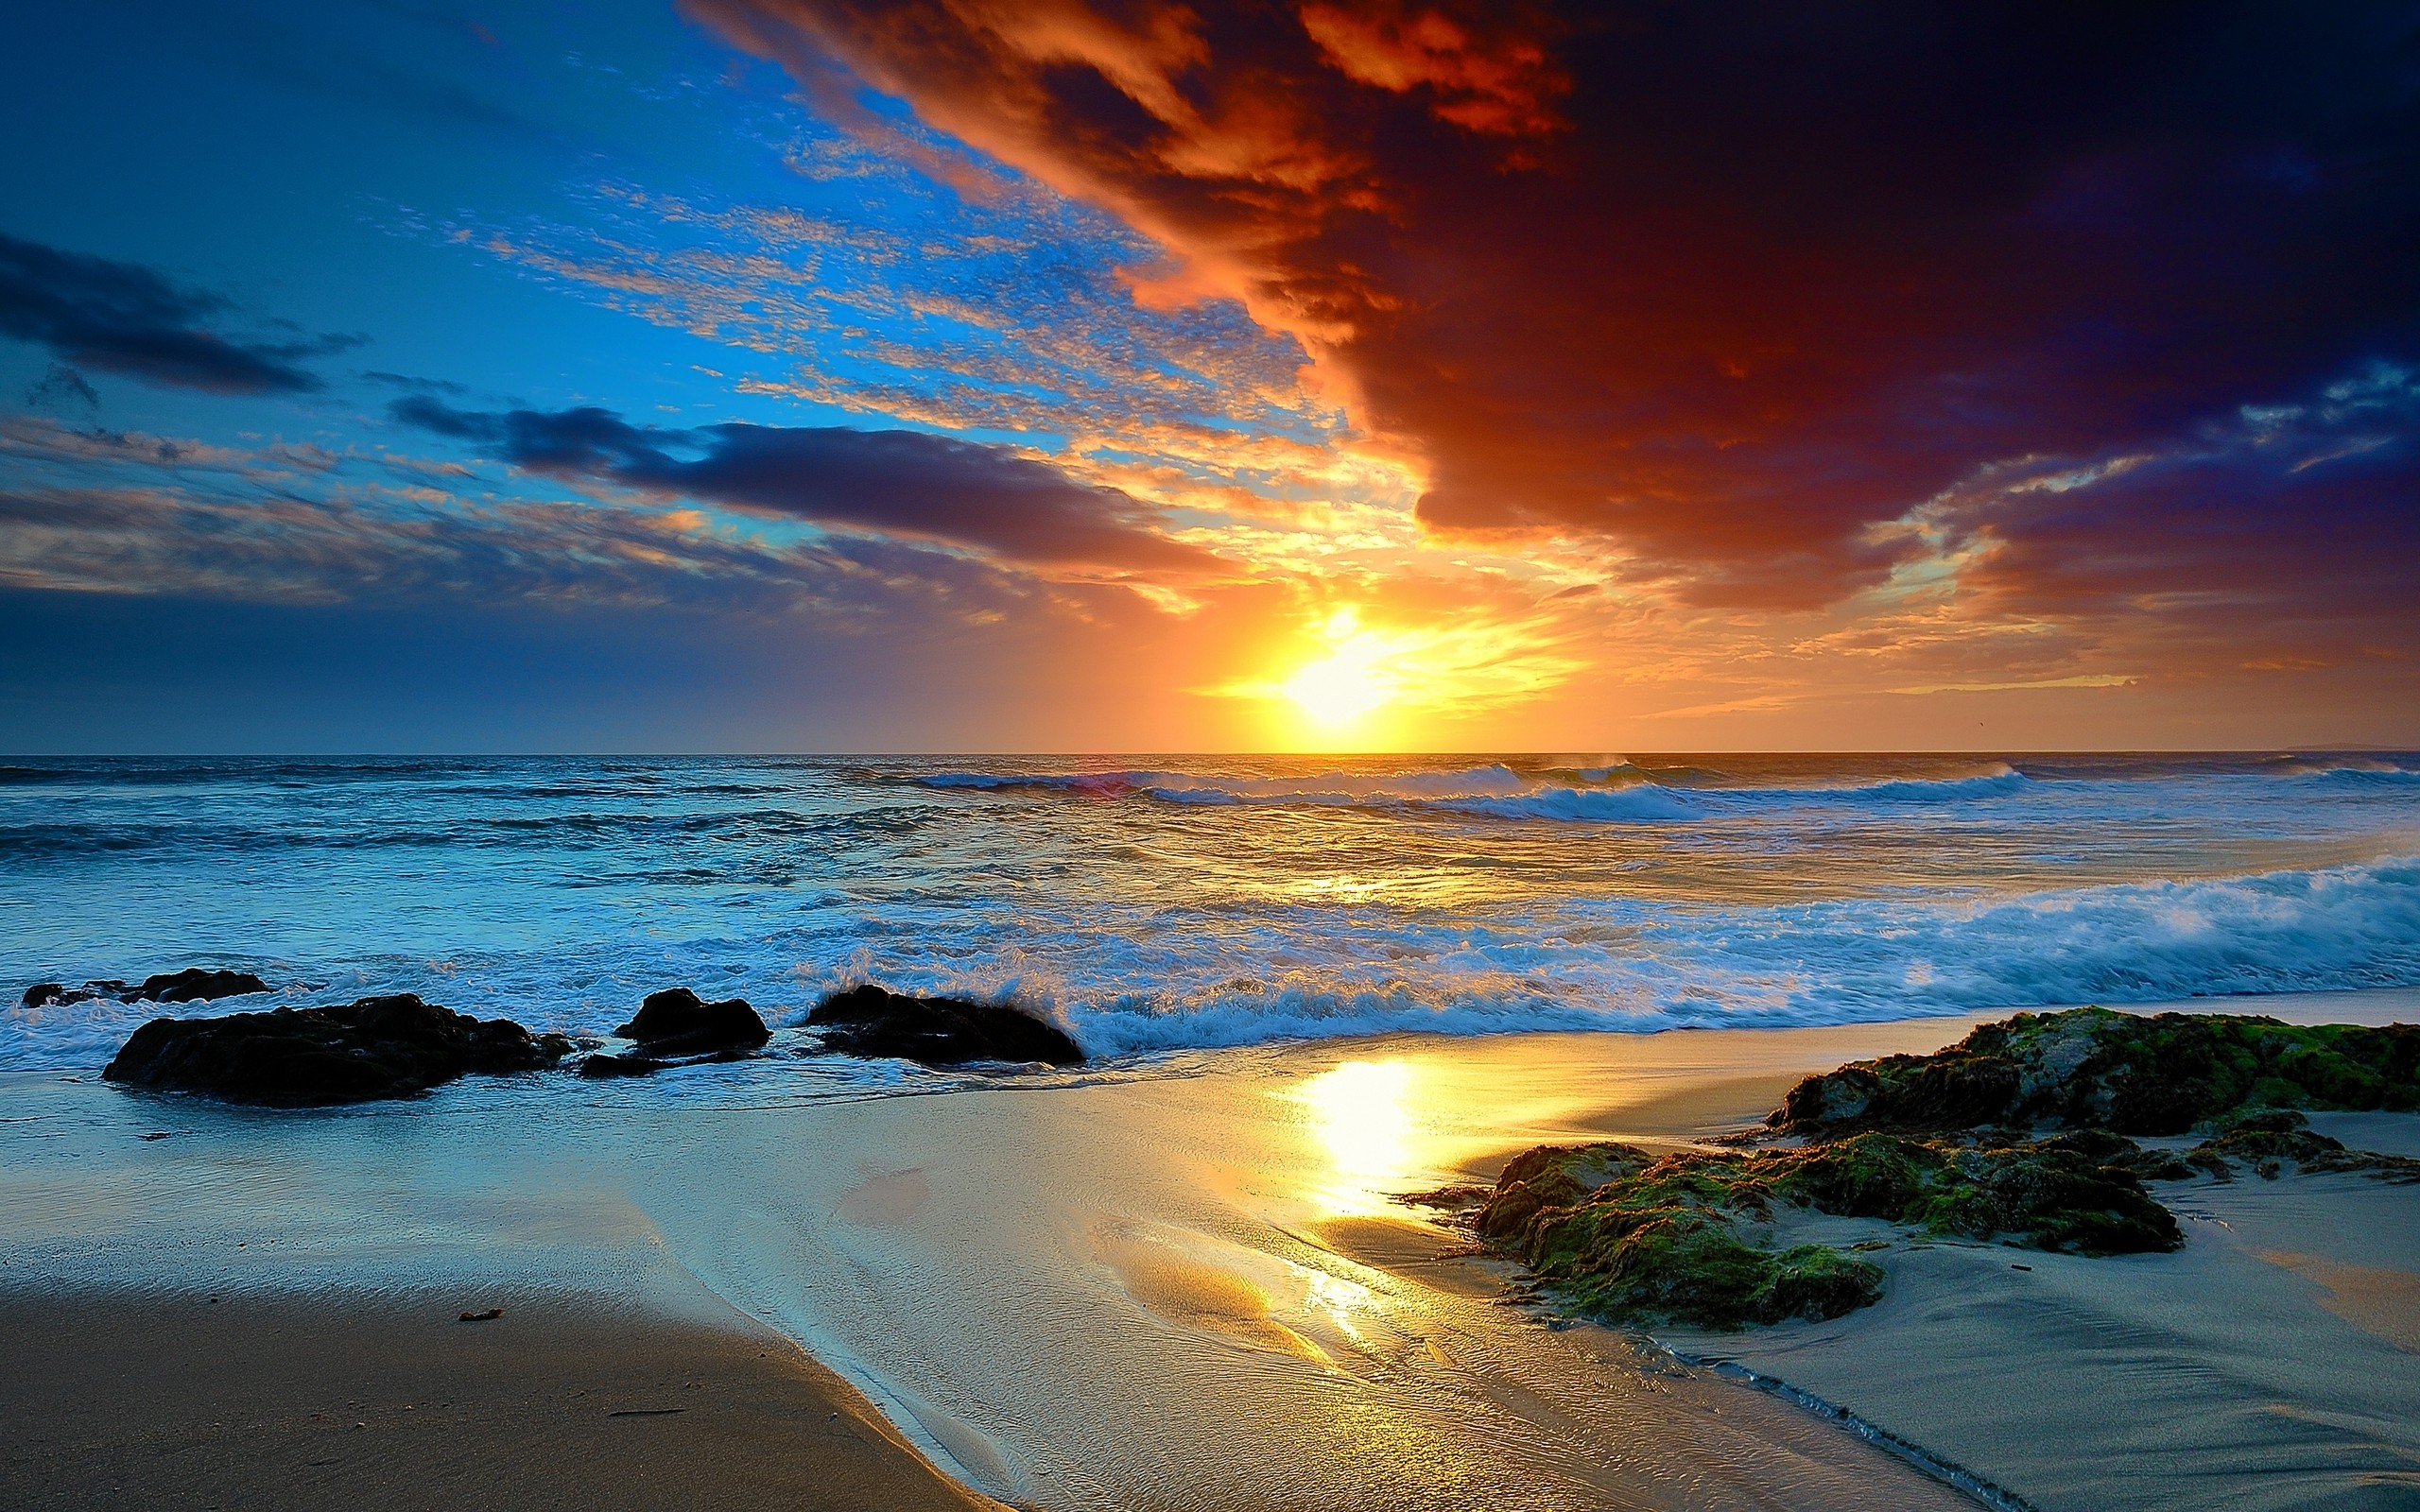 Beach Sunset Images